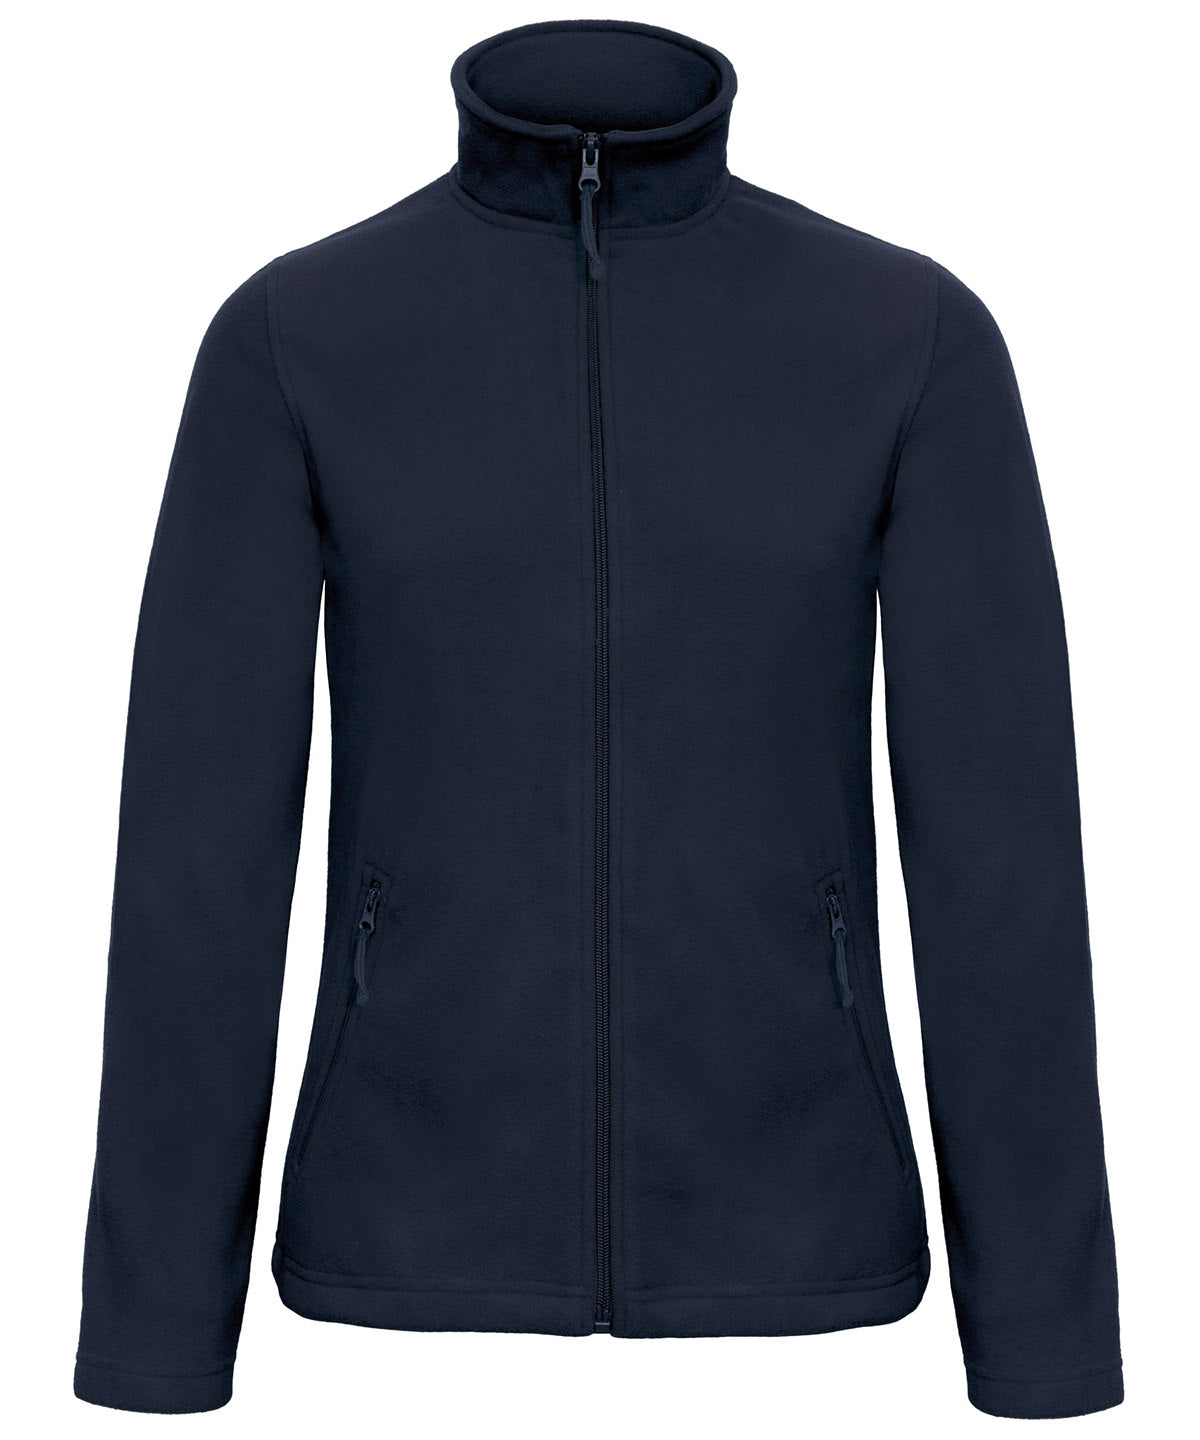 Personalised Jackets - Turquoise B&C Collection B&C ID.501 fleece /women